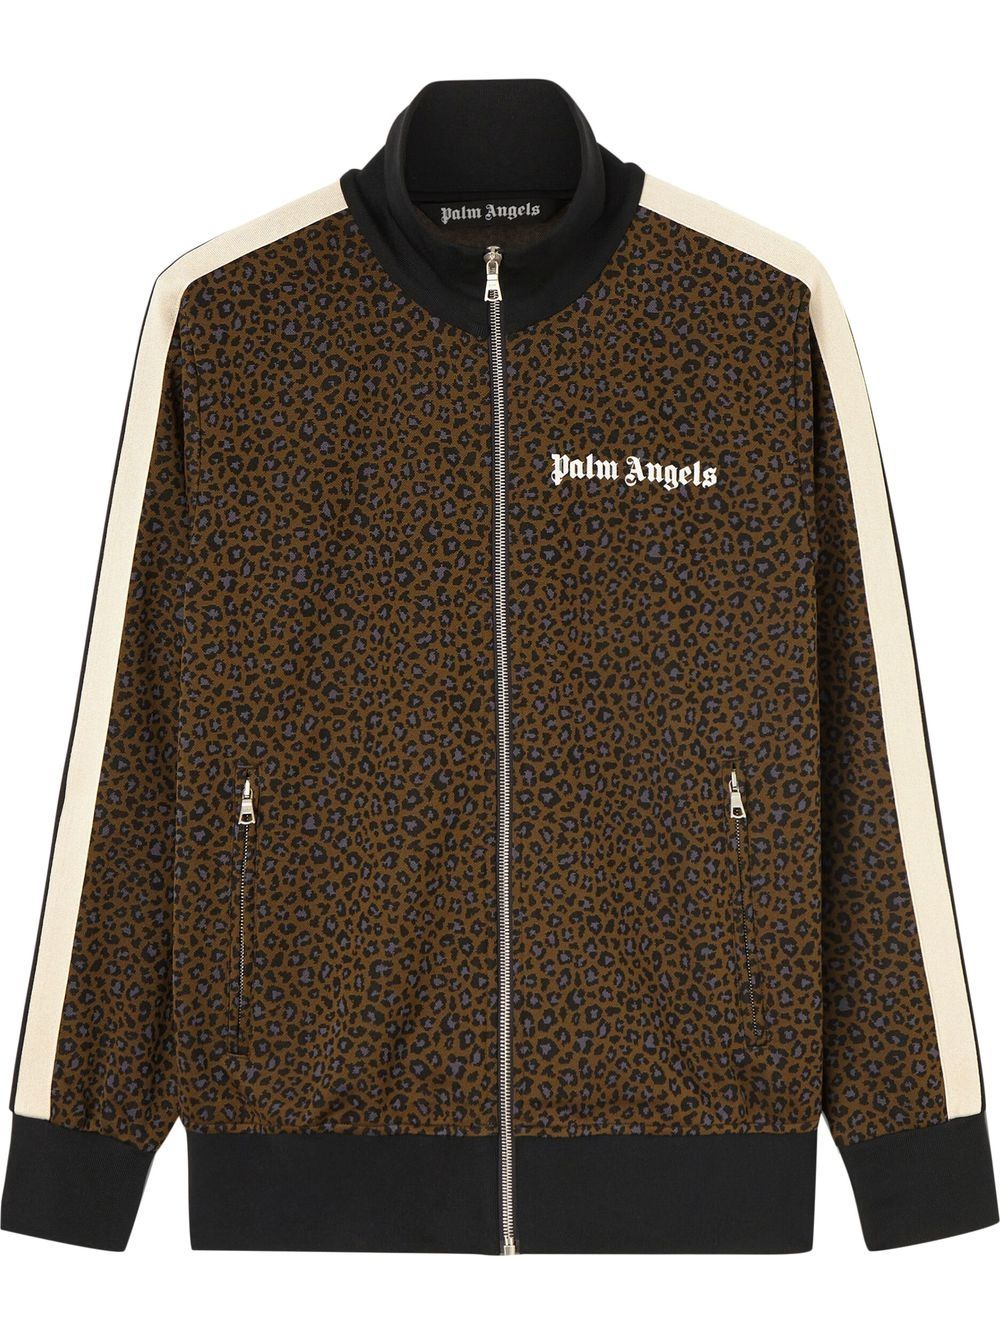 Palm Angels leopard-print track jacket